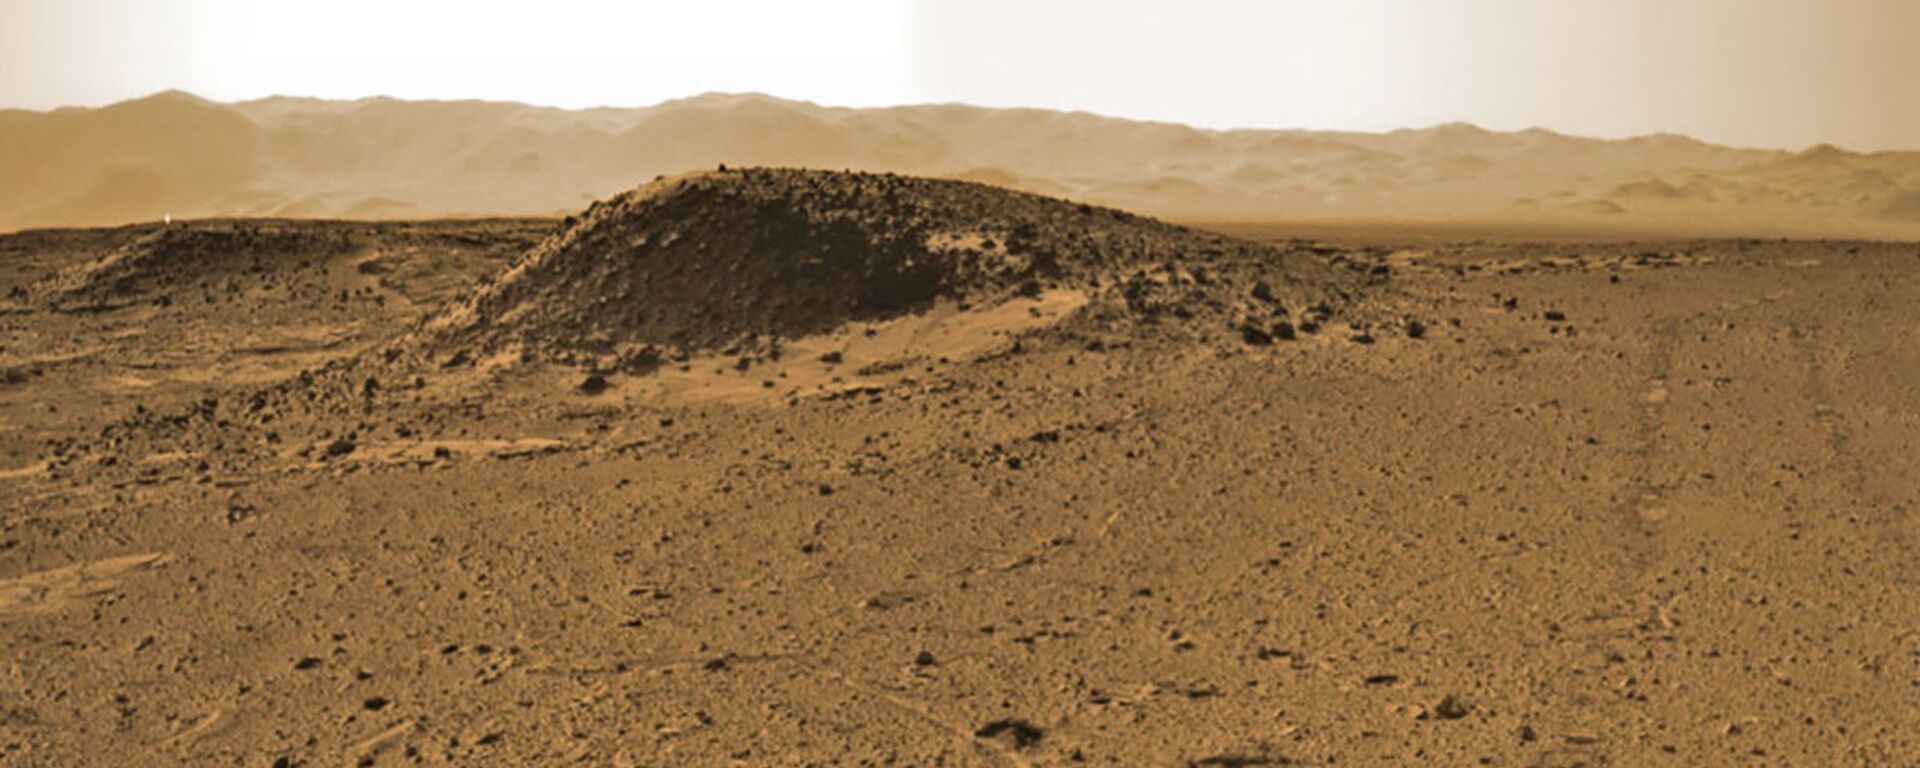 Вид на местность Kimberley на планете Марс  - Sputnik Казахстан, 1920, 23.08.2021